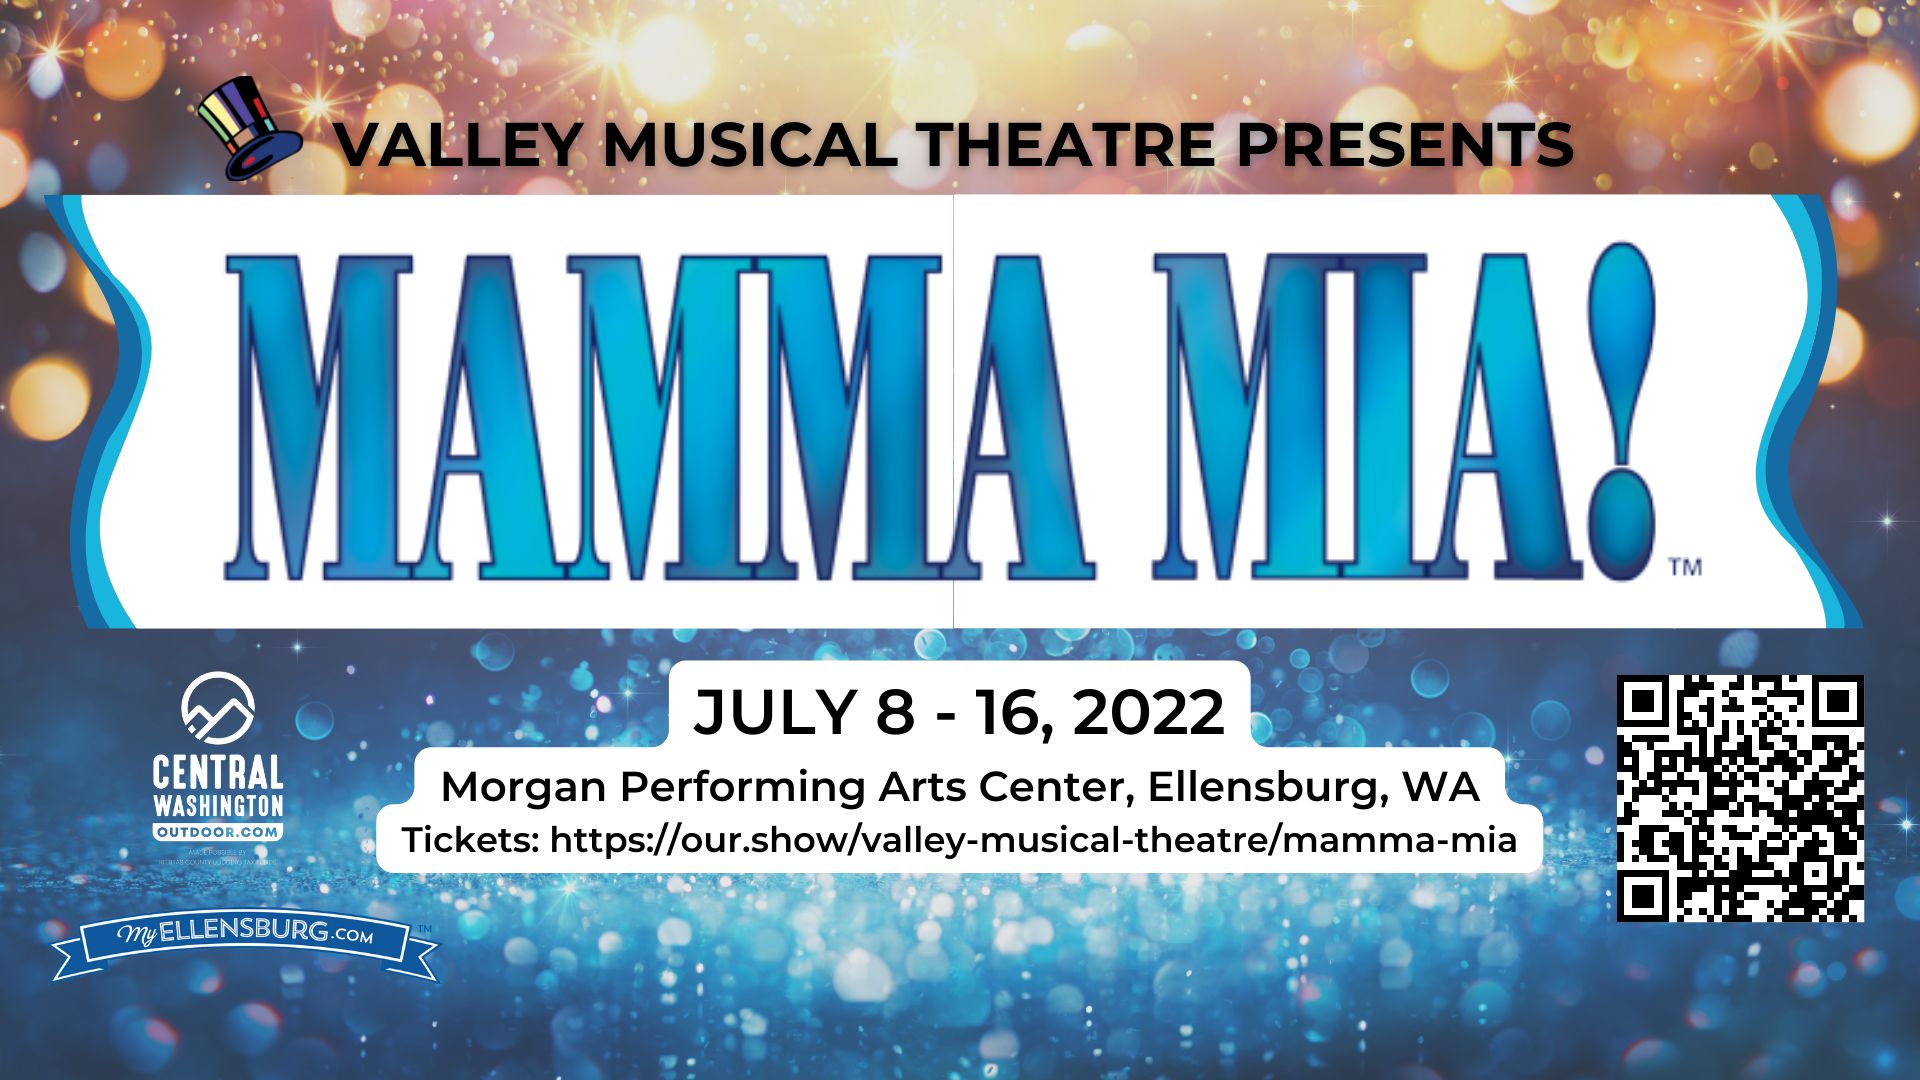 Valley Musical Theatre presents Mamma Mia!, Ellensburg, Washington, United States